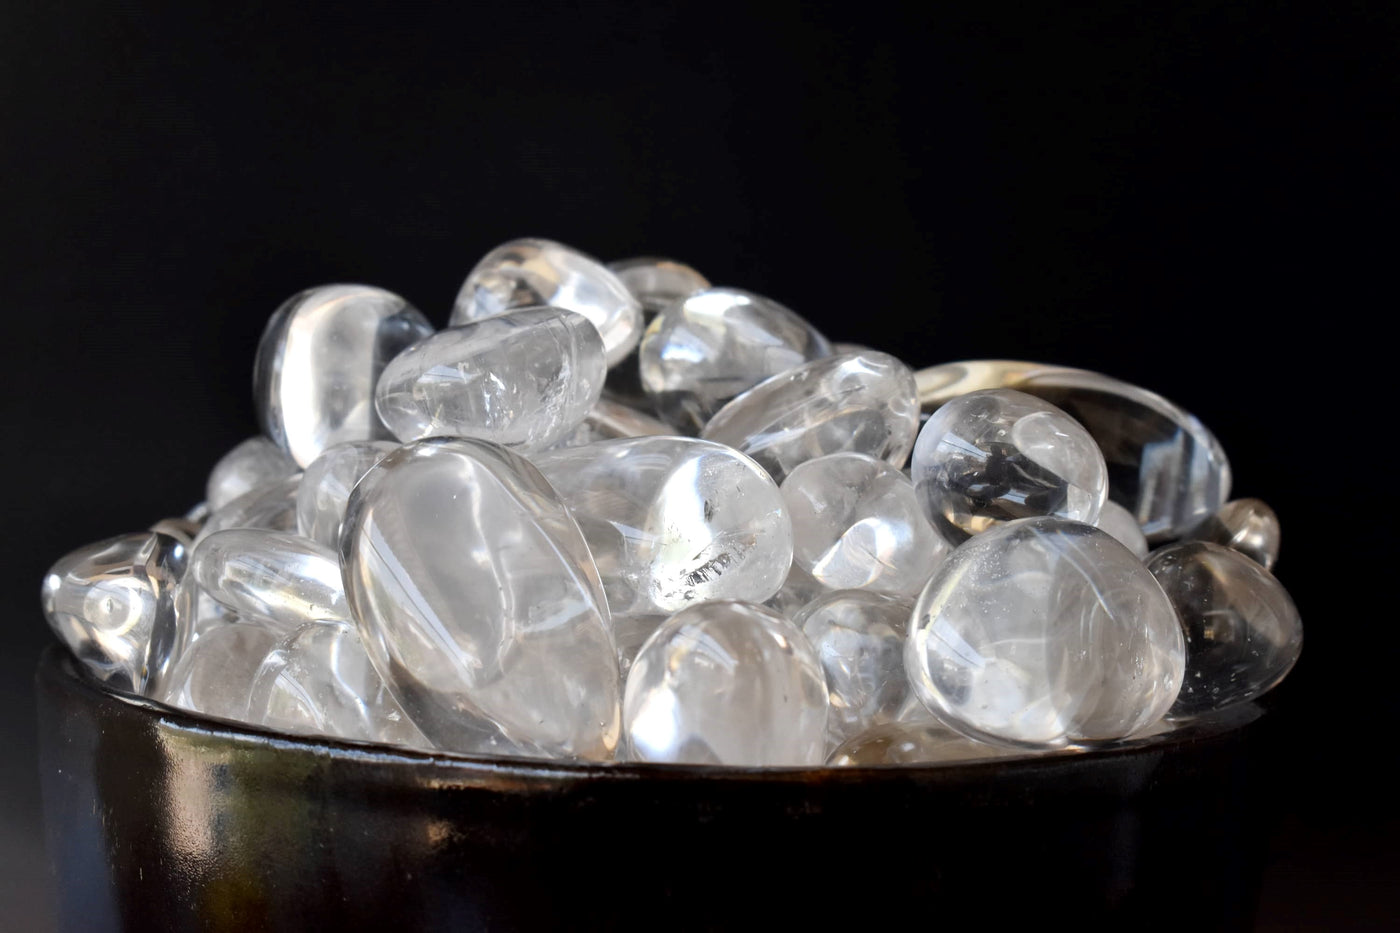 Crystal Quartz Tumbled Crystals (Dispelling Negative Energy and Dreams)